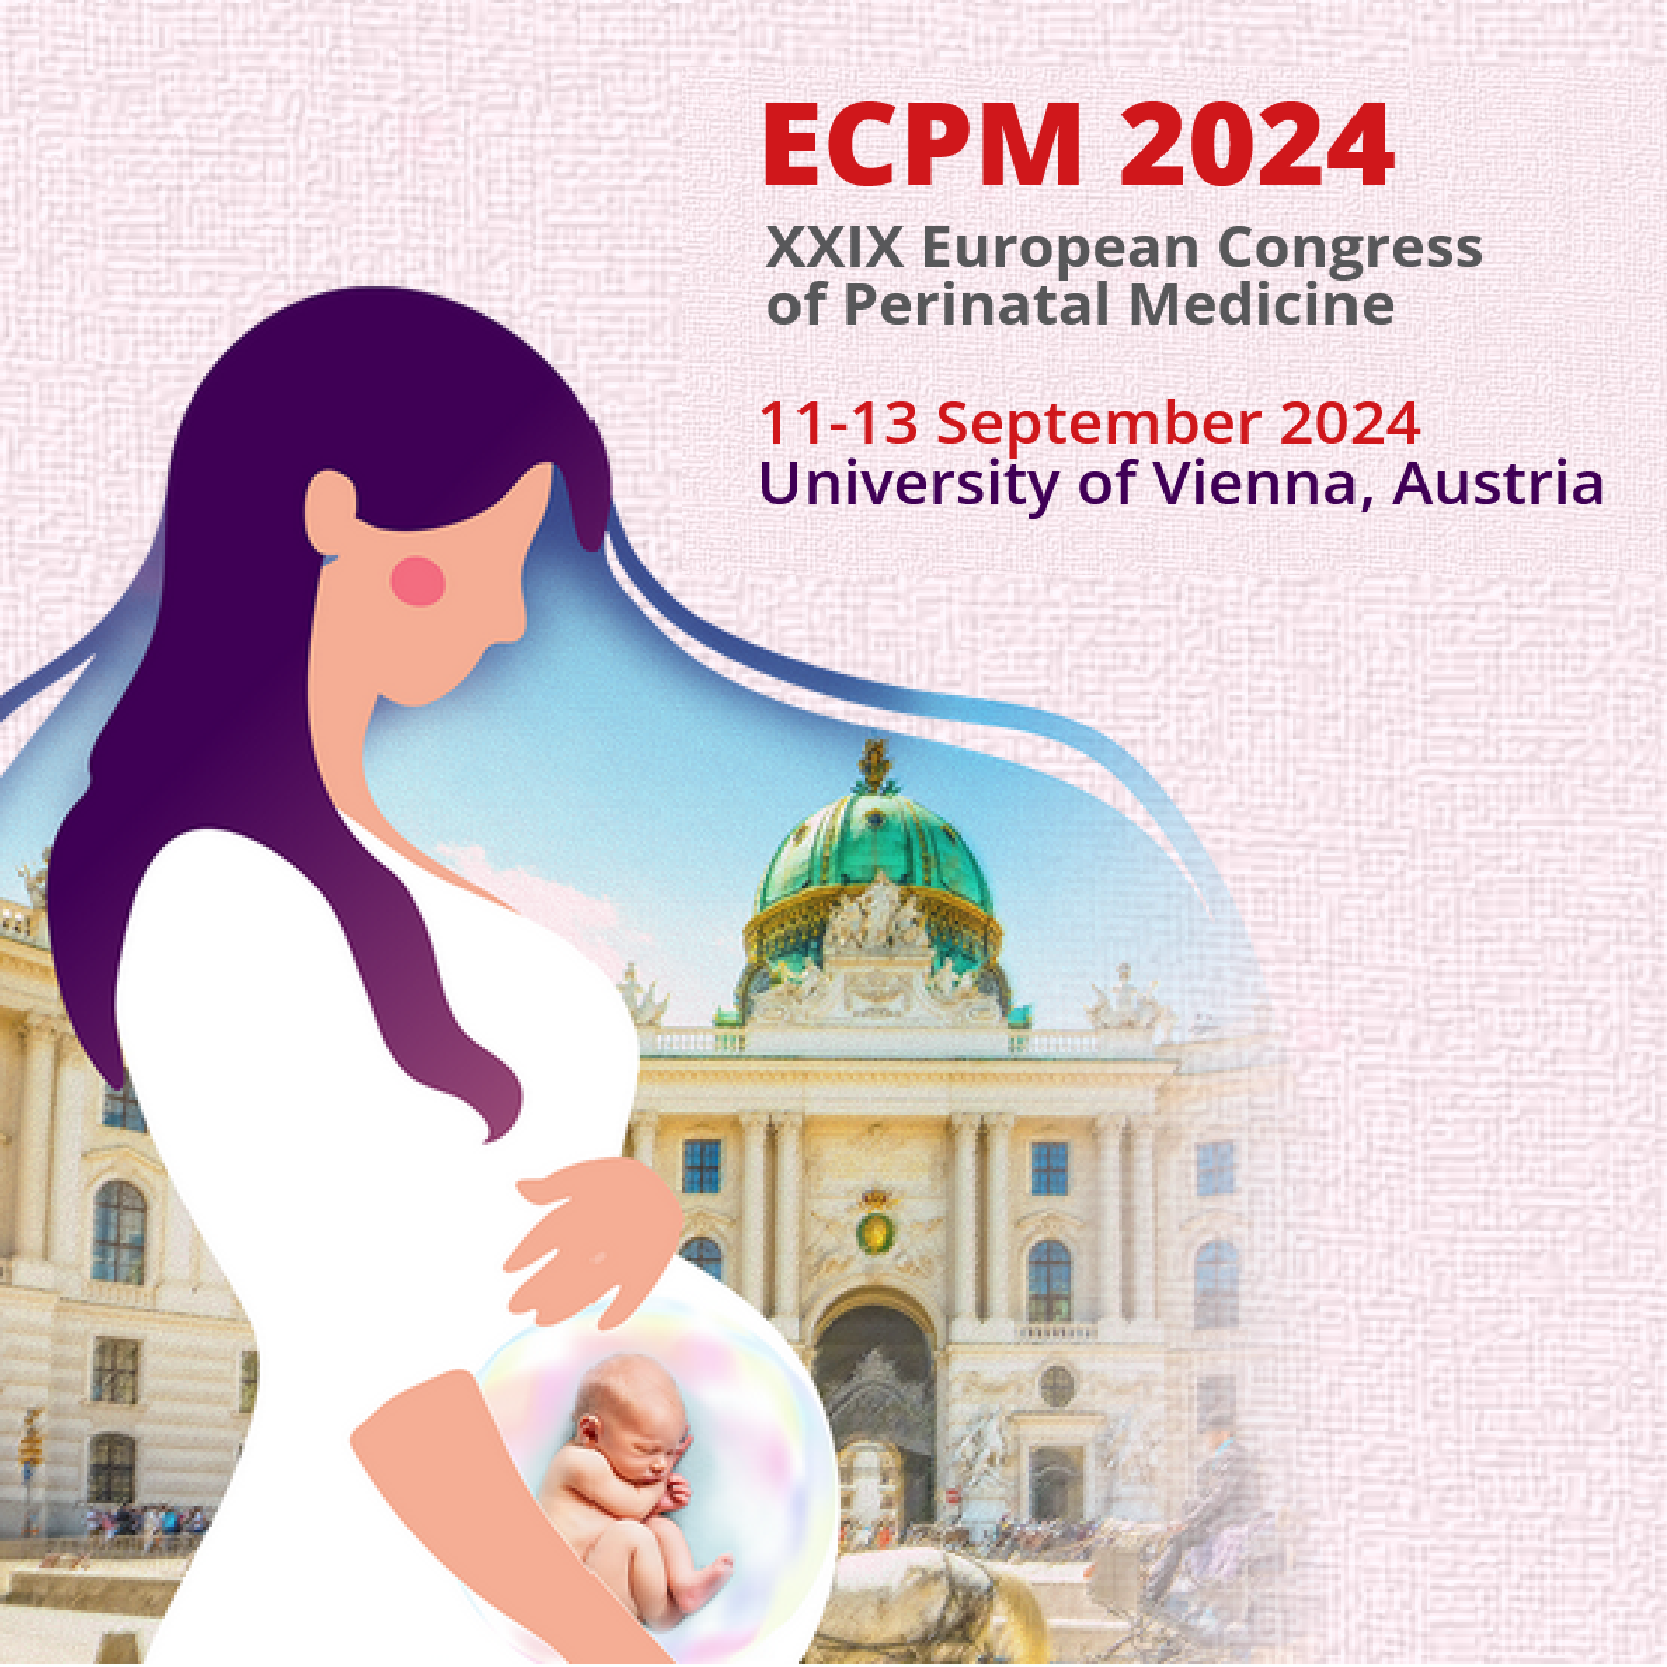 Medflixs XXIX European Congress of Perinatal Medicine ECPM 2024